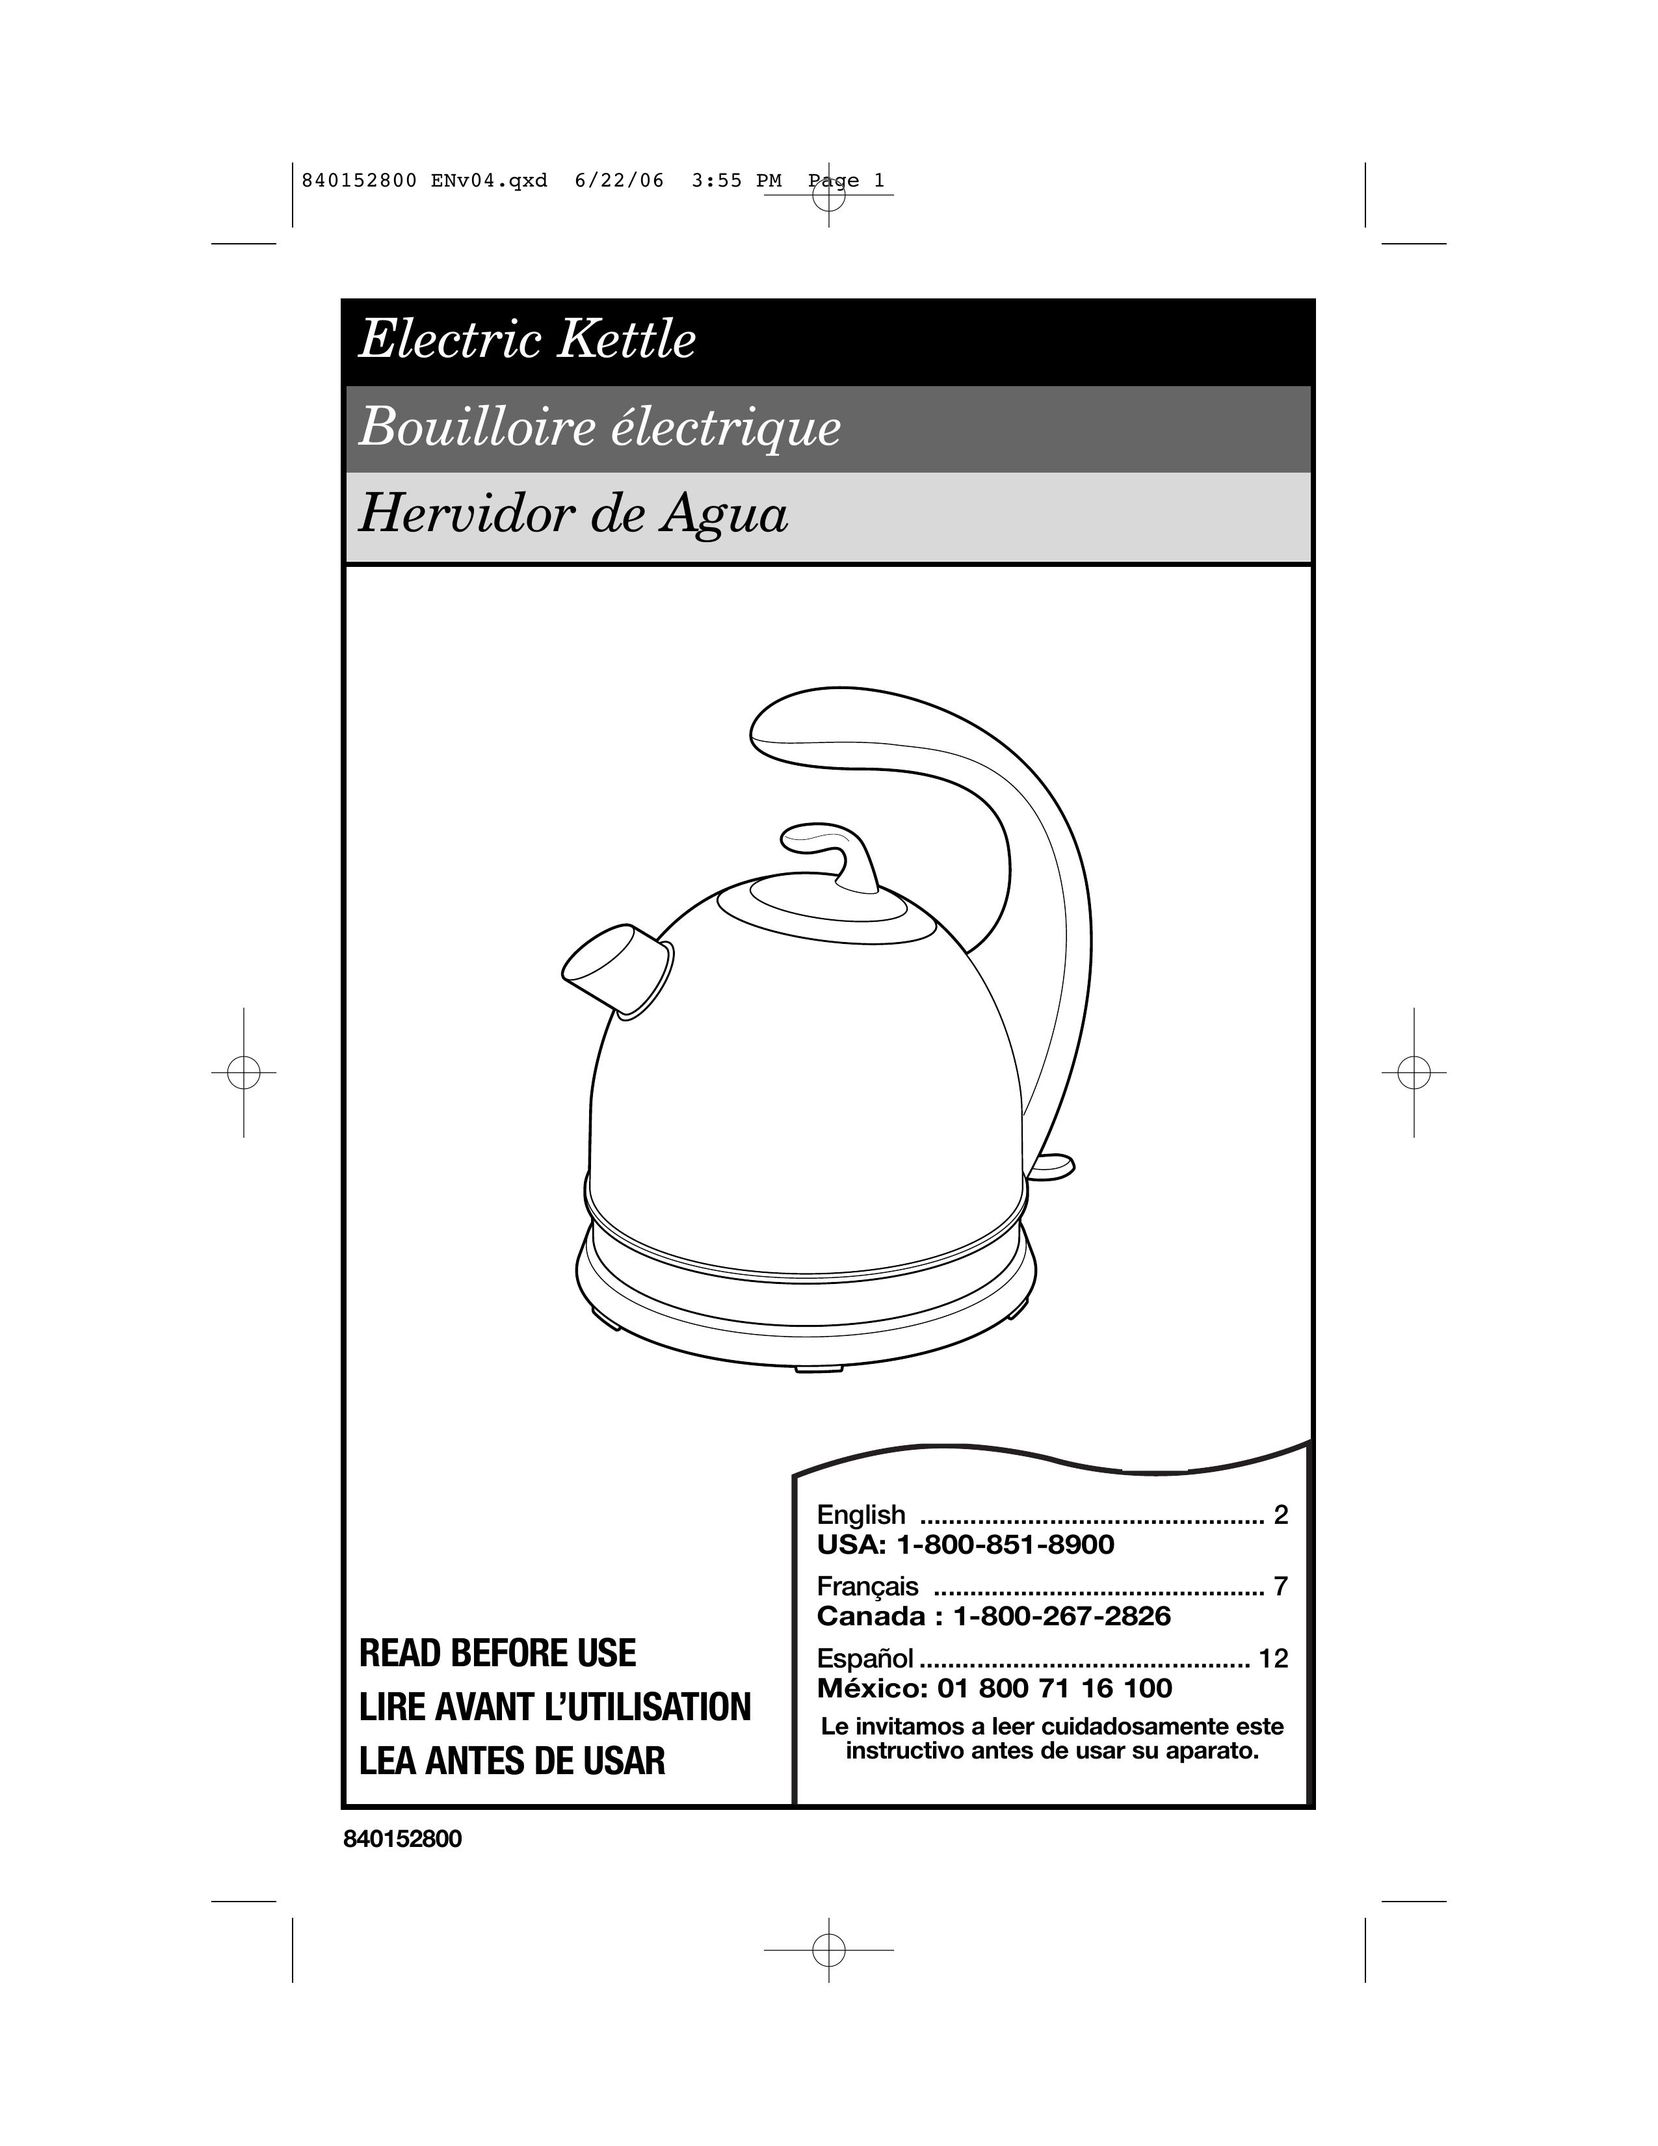 Hamilton Beach 40890 K14 Hot Beverage Maker User Manual